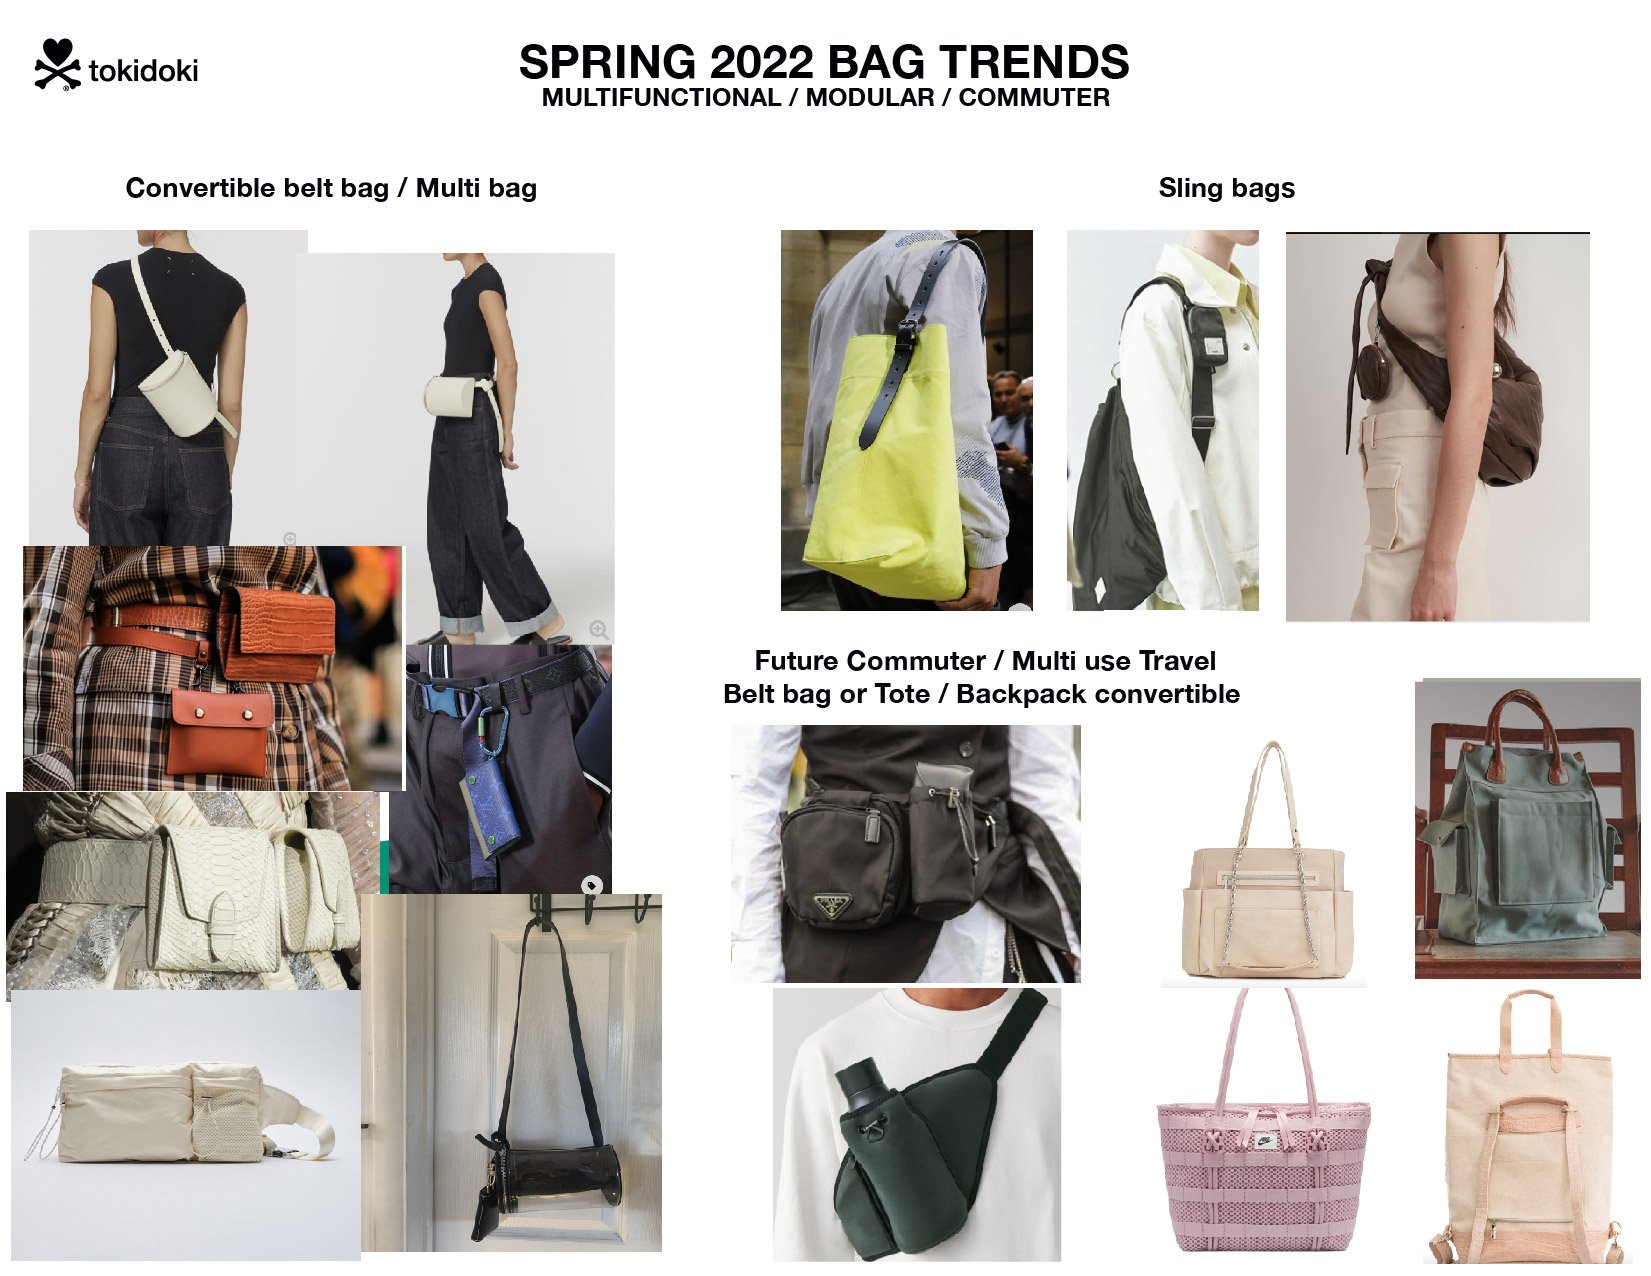 SS 22 Bag Trends-02.jpg